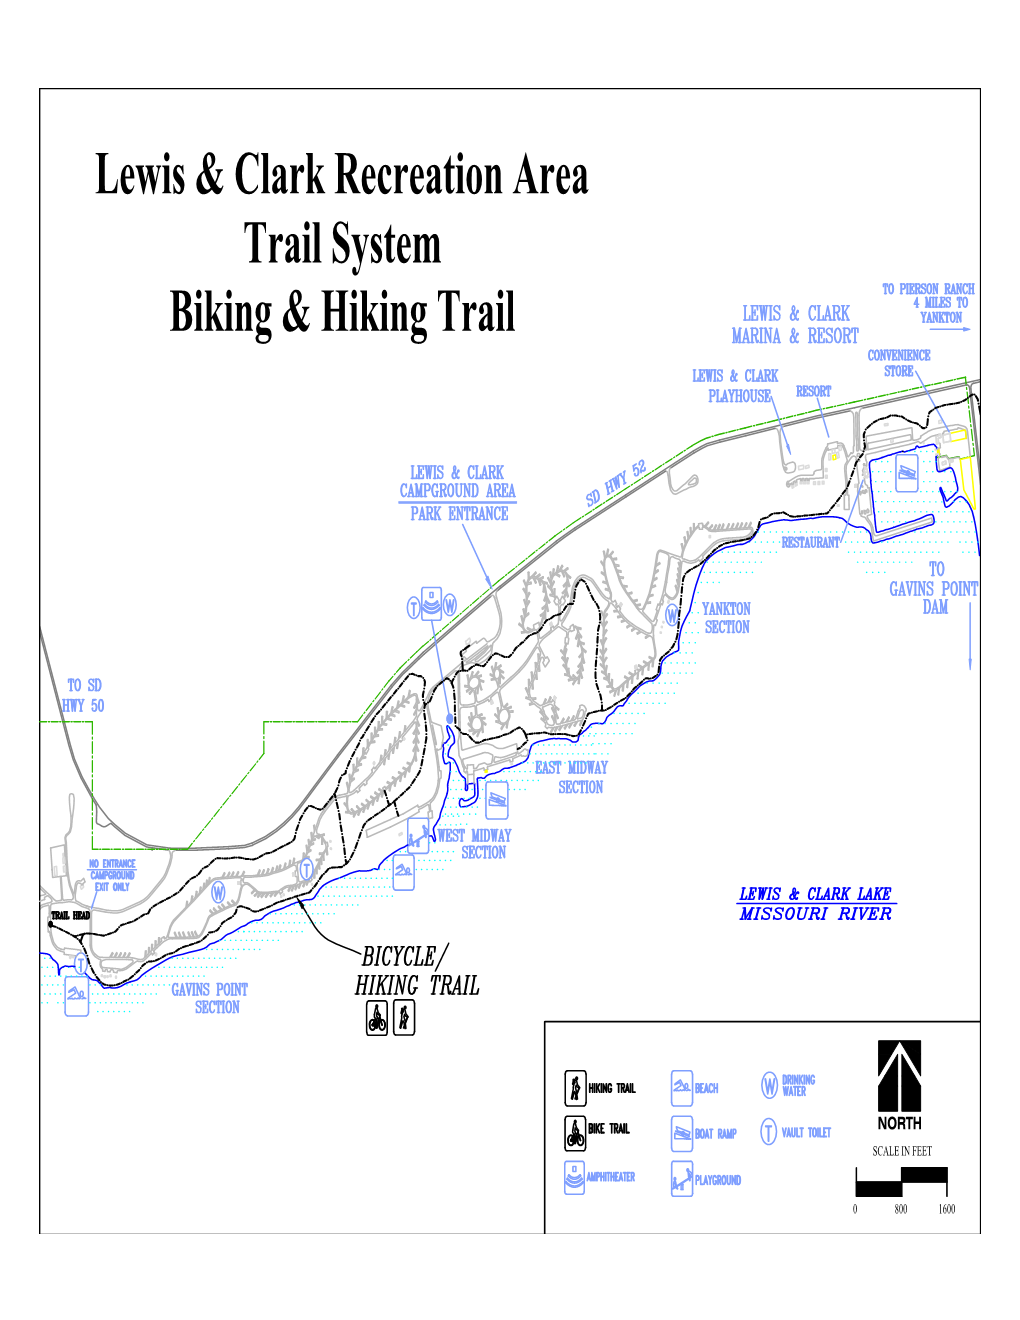 Lewis & Clark Recreation Area Trail System Biking & Hiking Trail